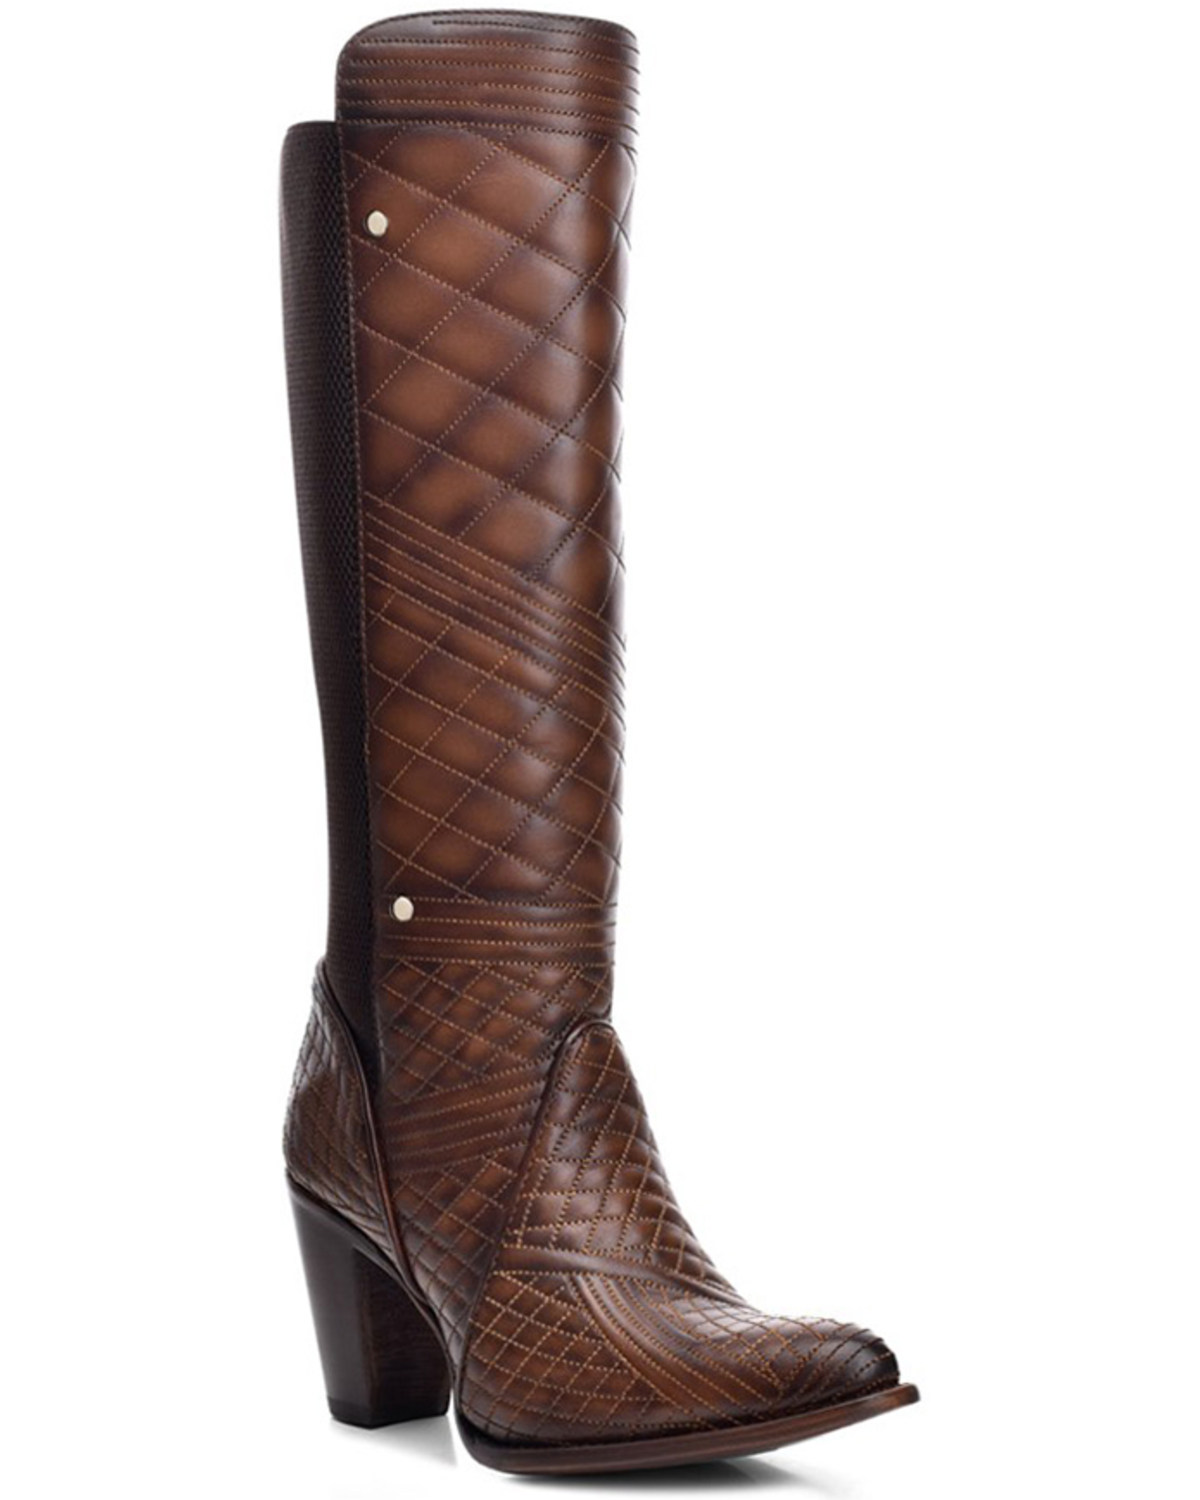 Cuadra Women's Tall Western Boots - Round Toe